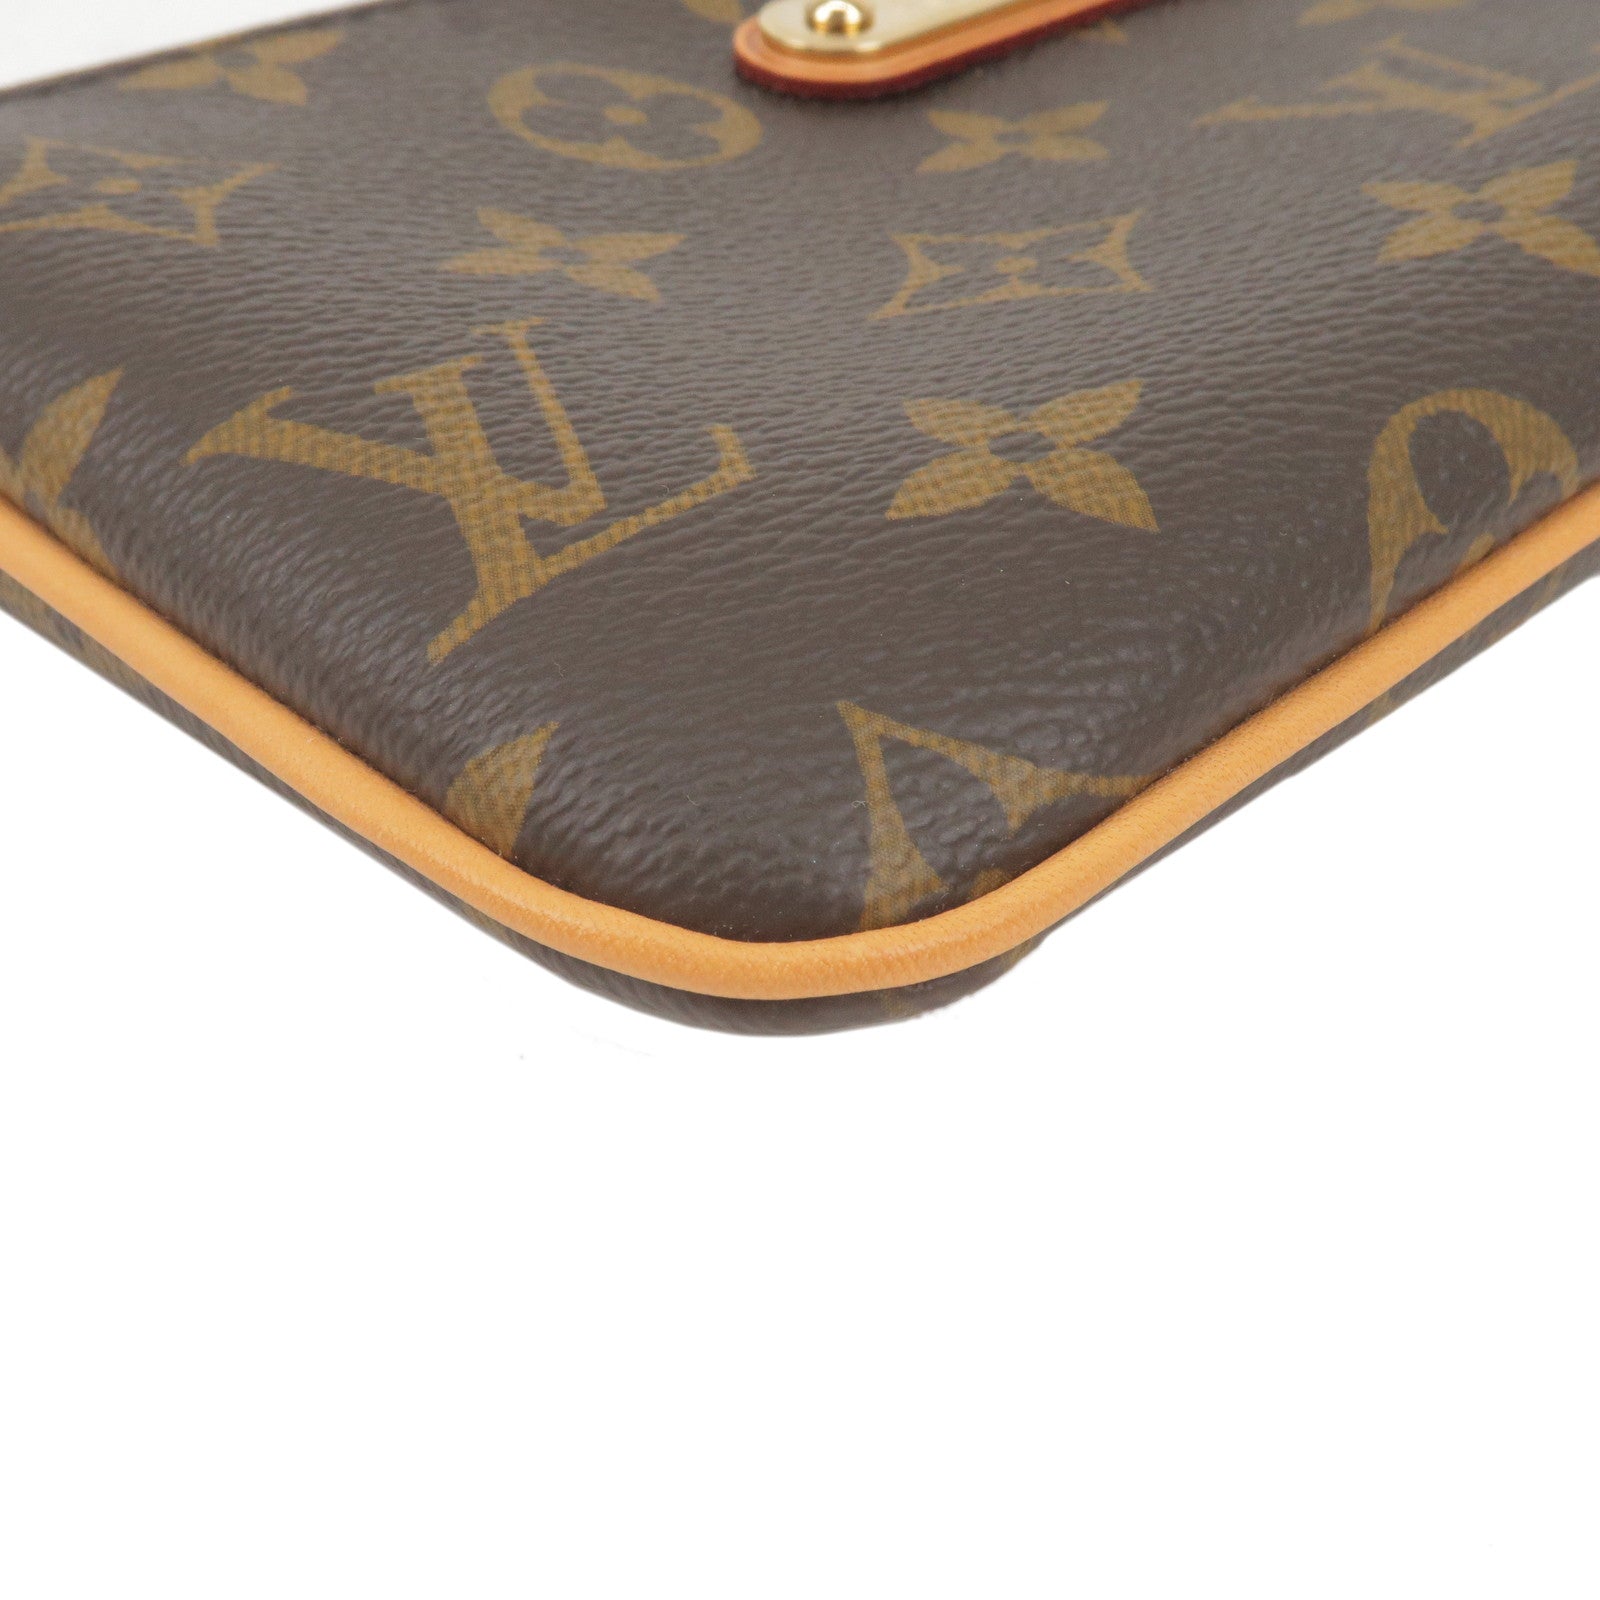 Louis Vuitton 2018 pre-owned Monogram Saumur 30 Messenger Bag